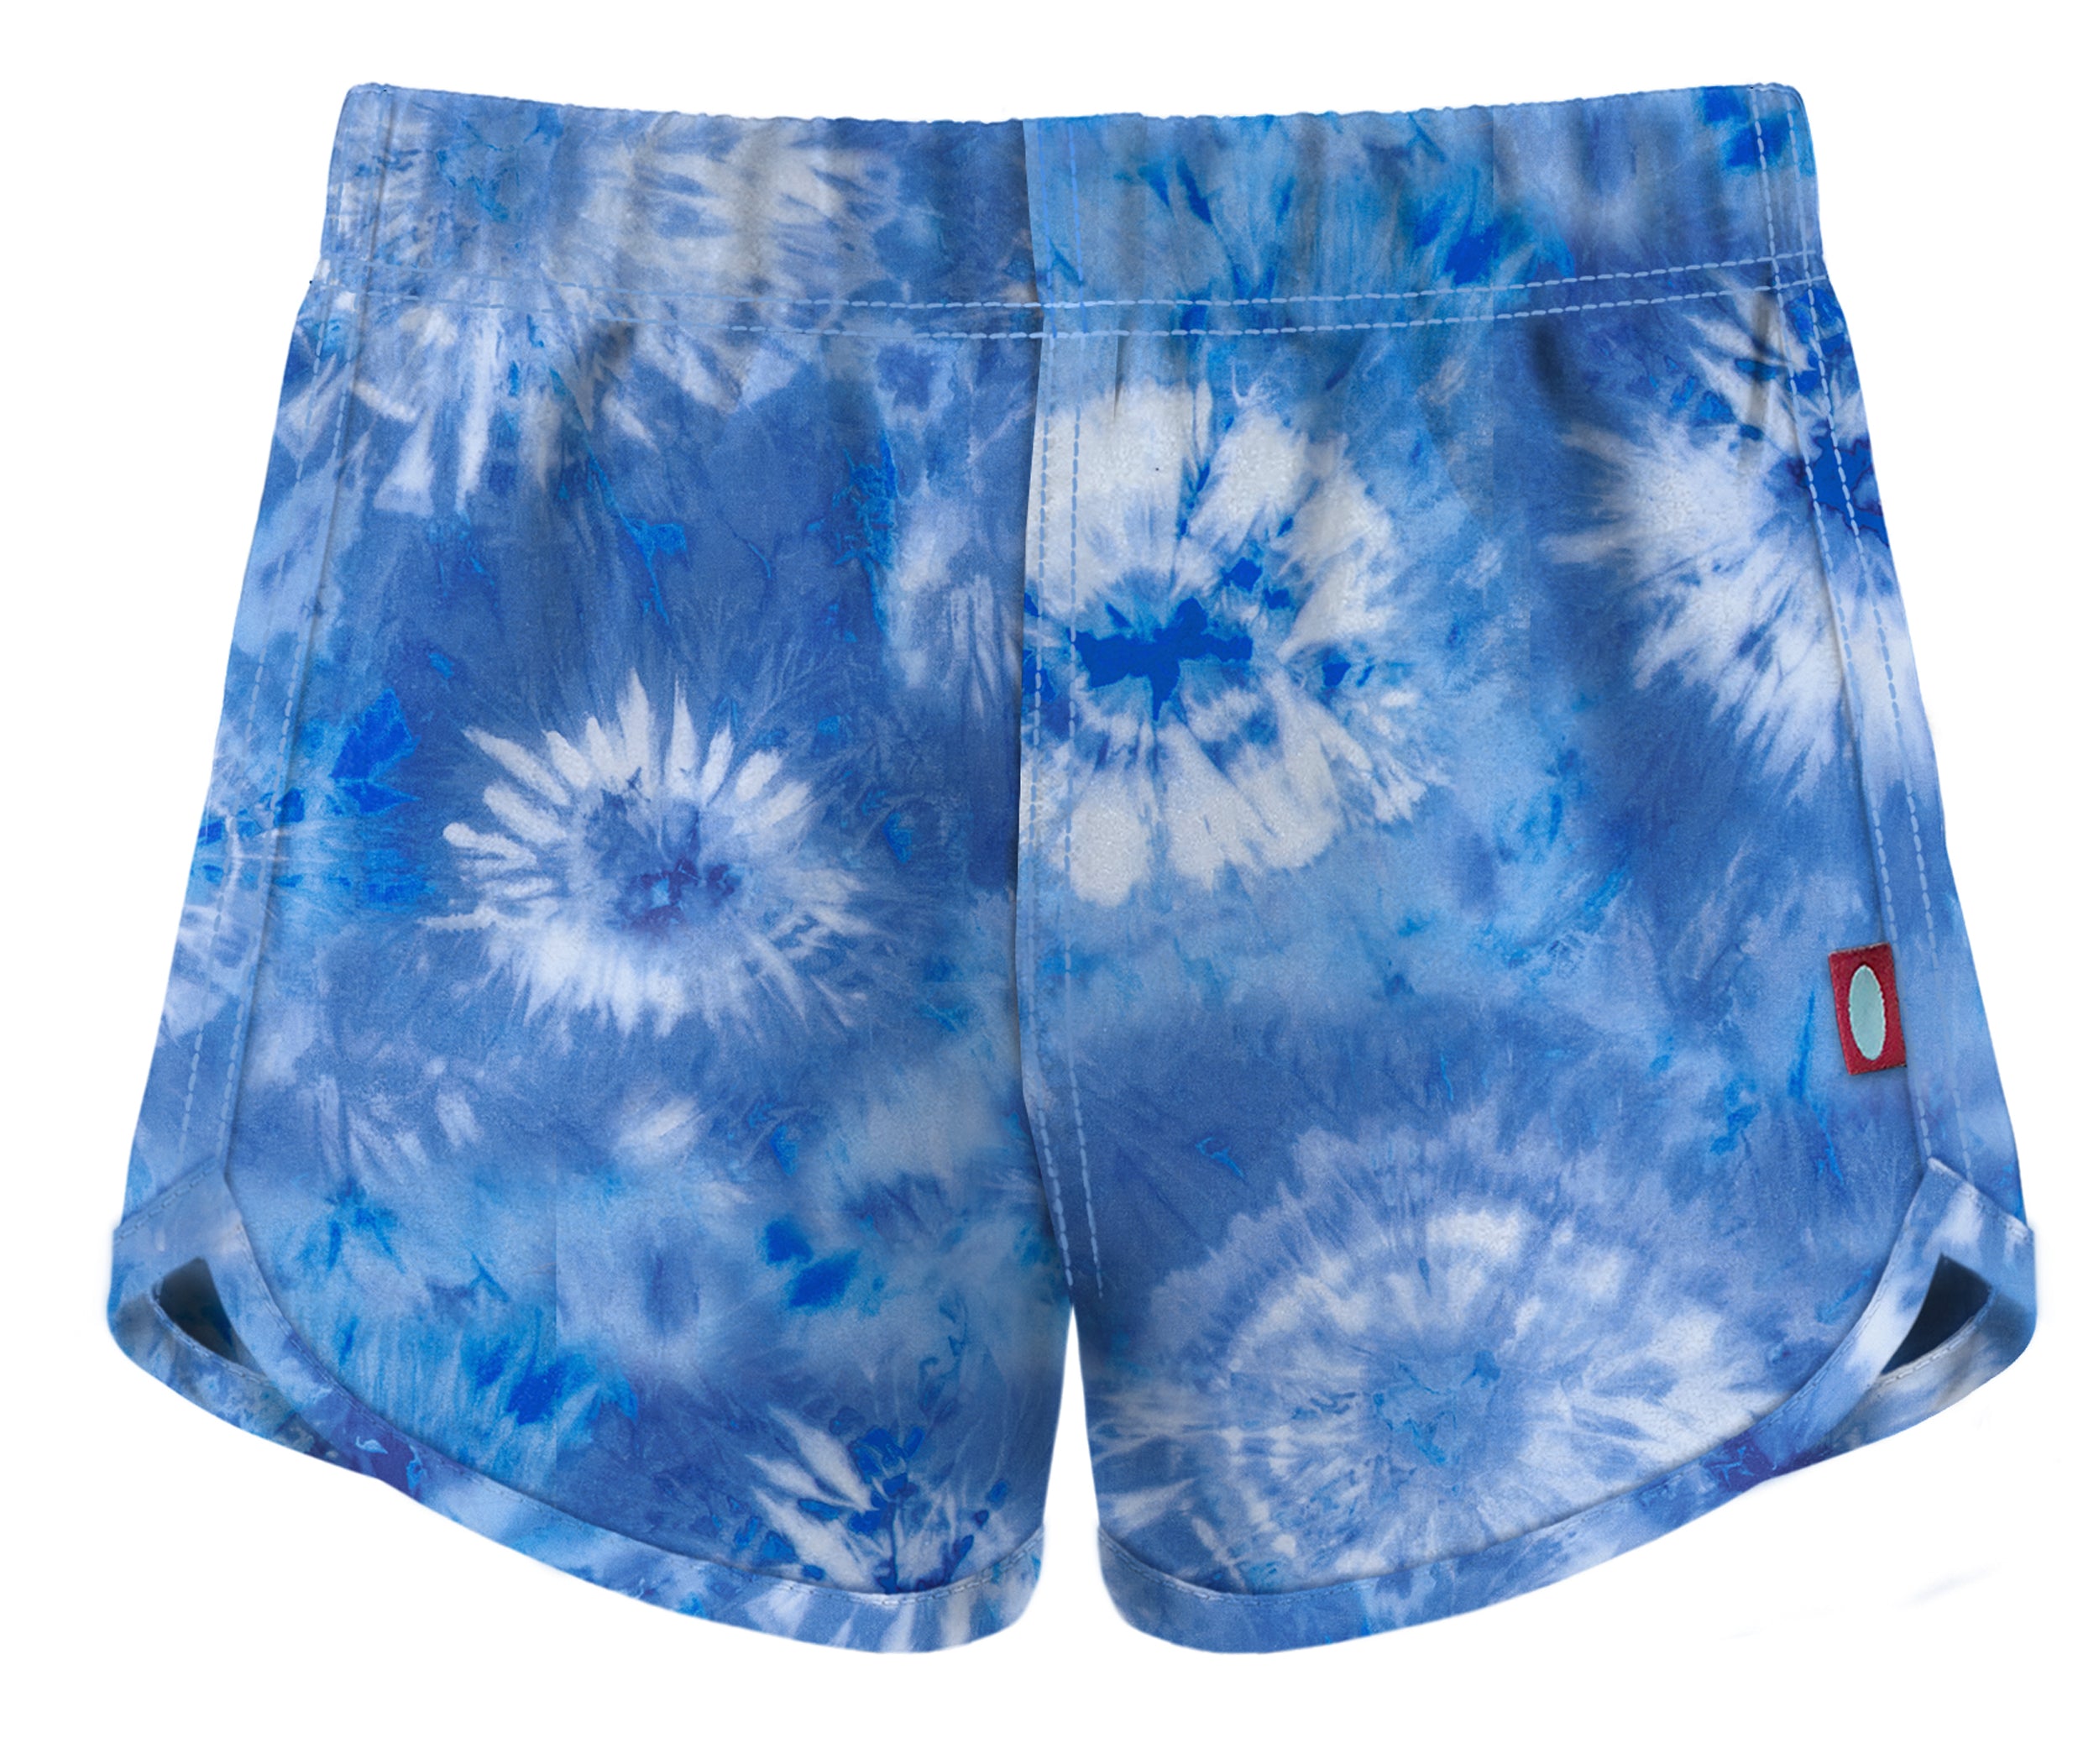 Tropical Swim Shorts, for Girls - blue medium all over printed